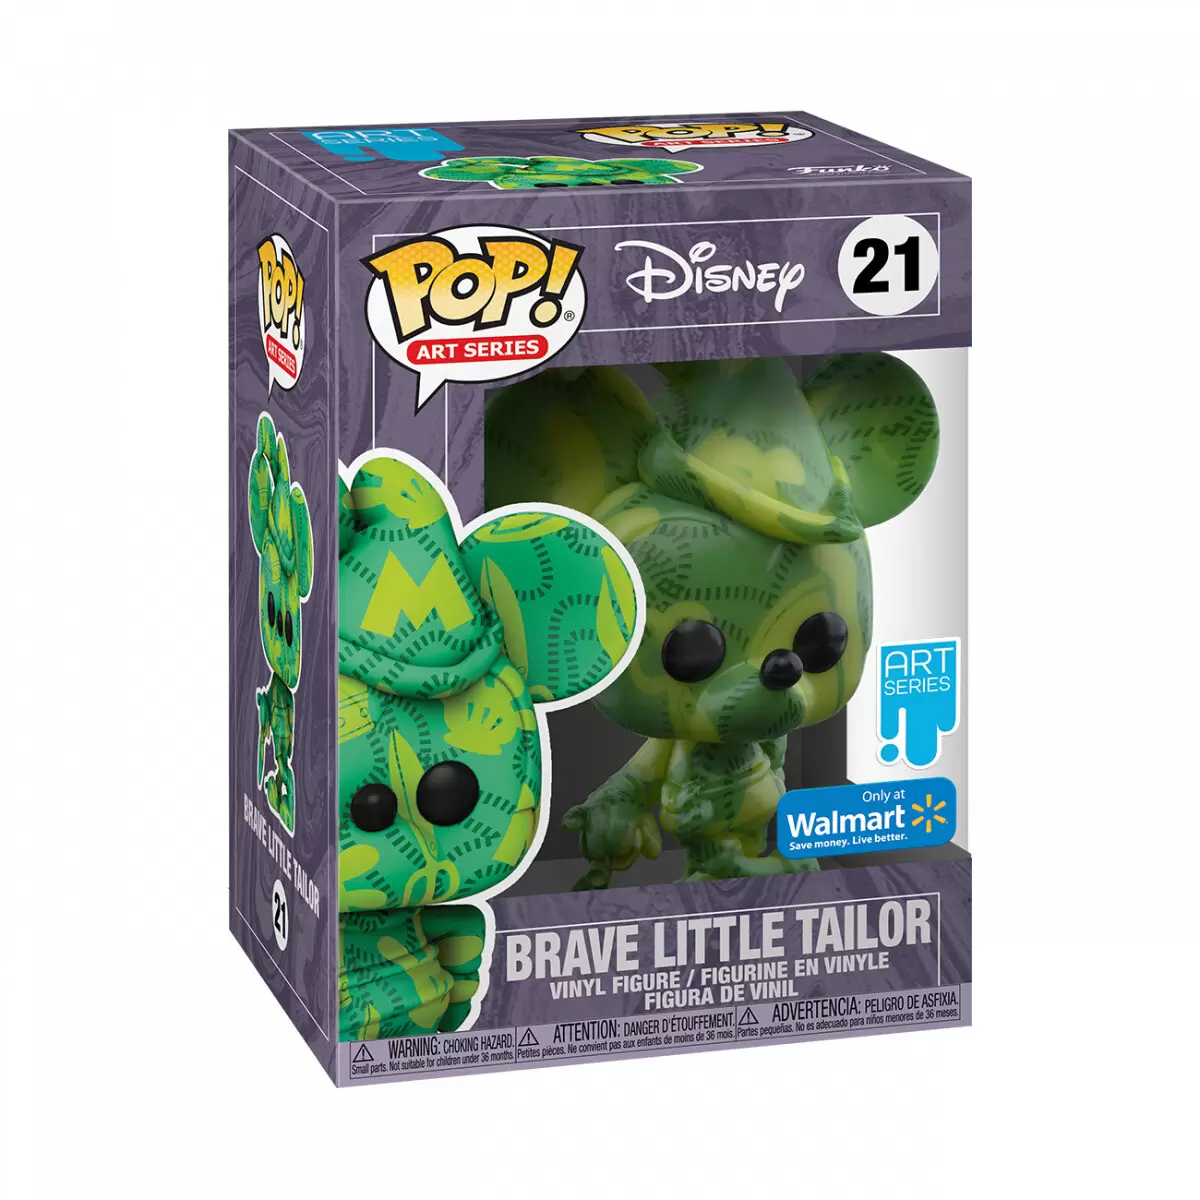 POP! Art Series - Disney - Mickey Brave Little Tailor